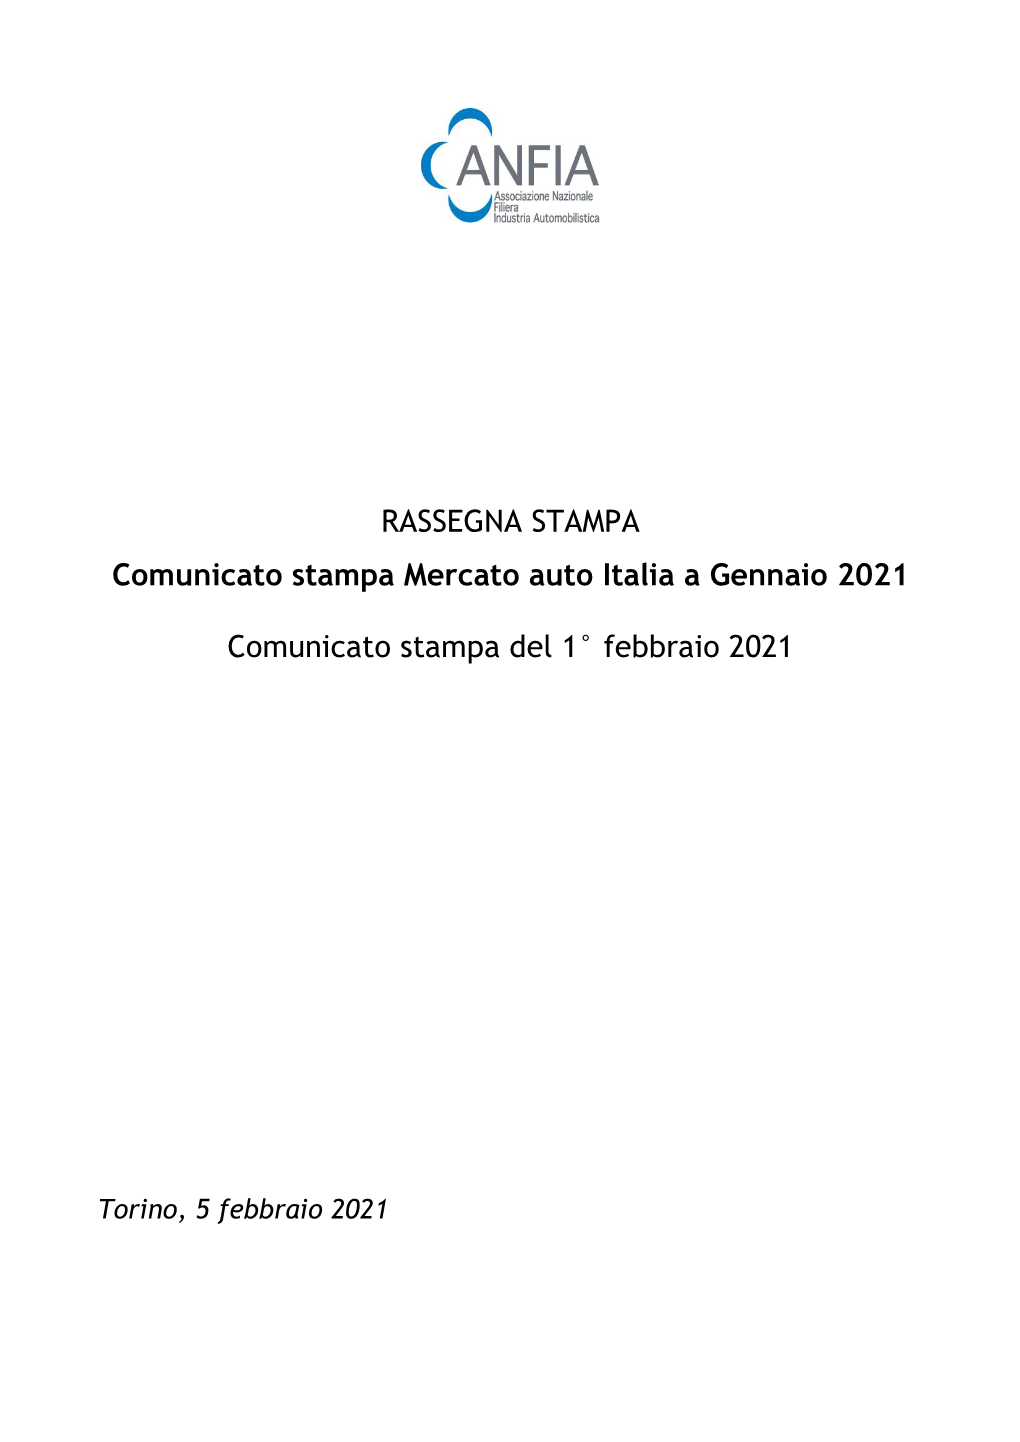 Rassegna Stampa Comunicato Stampa Mercato Vetture Italia